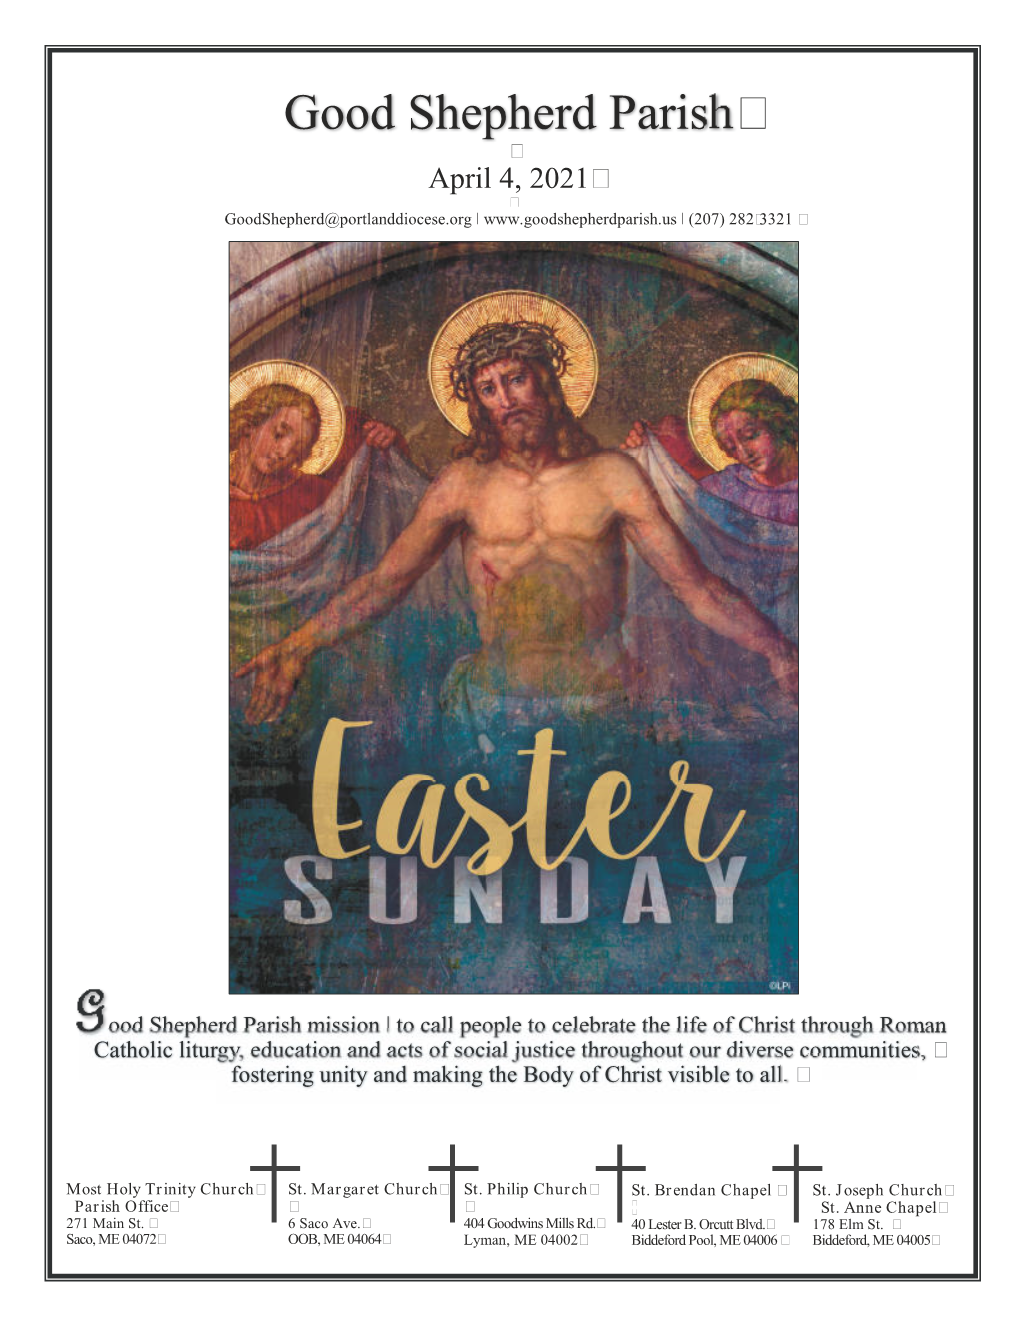 April 4, 2021  Goodshepherd@Portlanddiocese.Org ǀ ǀ (207) 2823321 